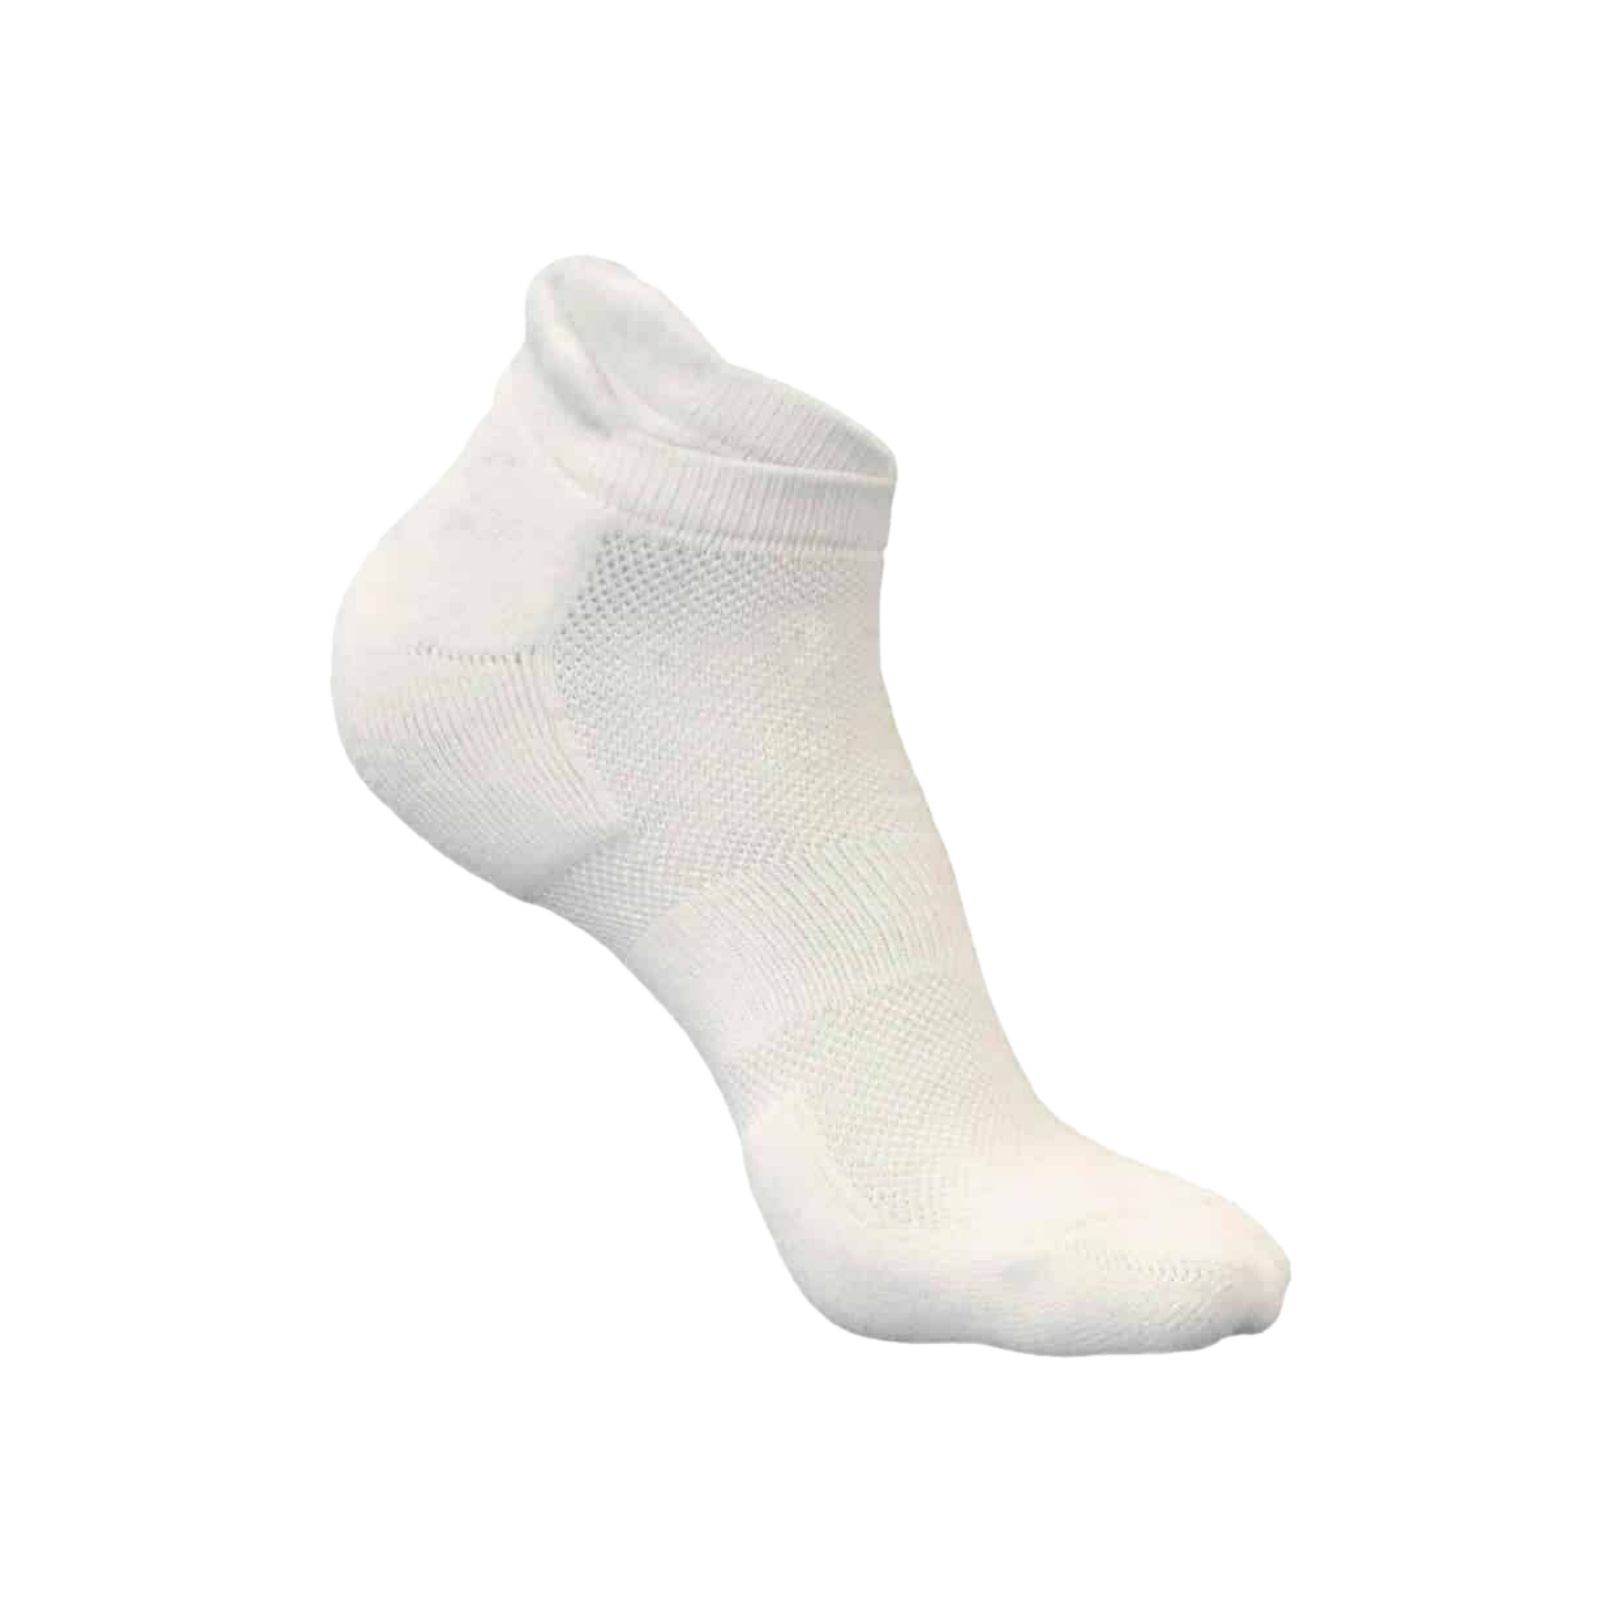 Natsbyte Bamboo Socks for Men | Ankle Length | Odour-Free & Breathable | Padded Base & Anti-bacterial | 3X Softer than Cotton Socks- White